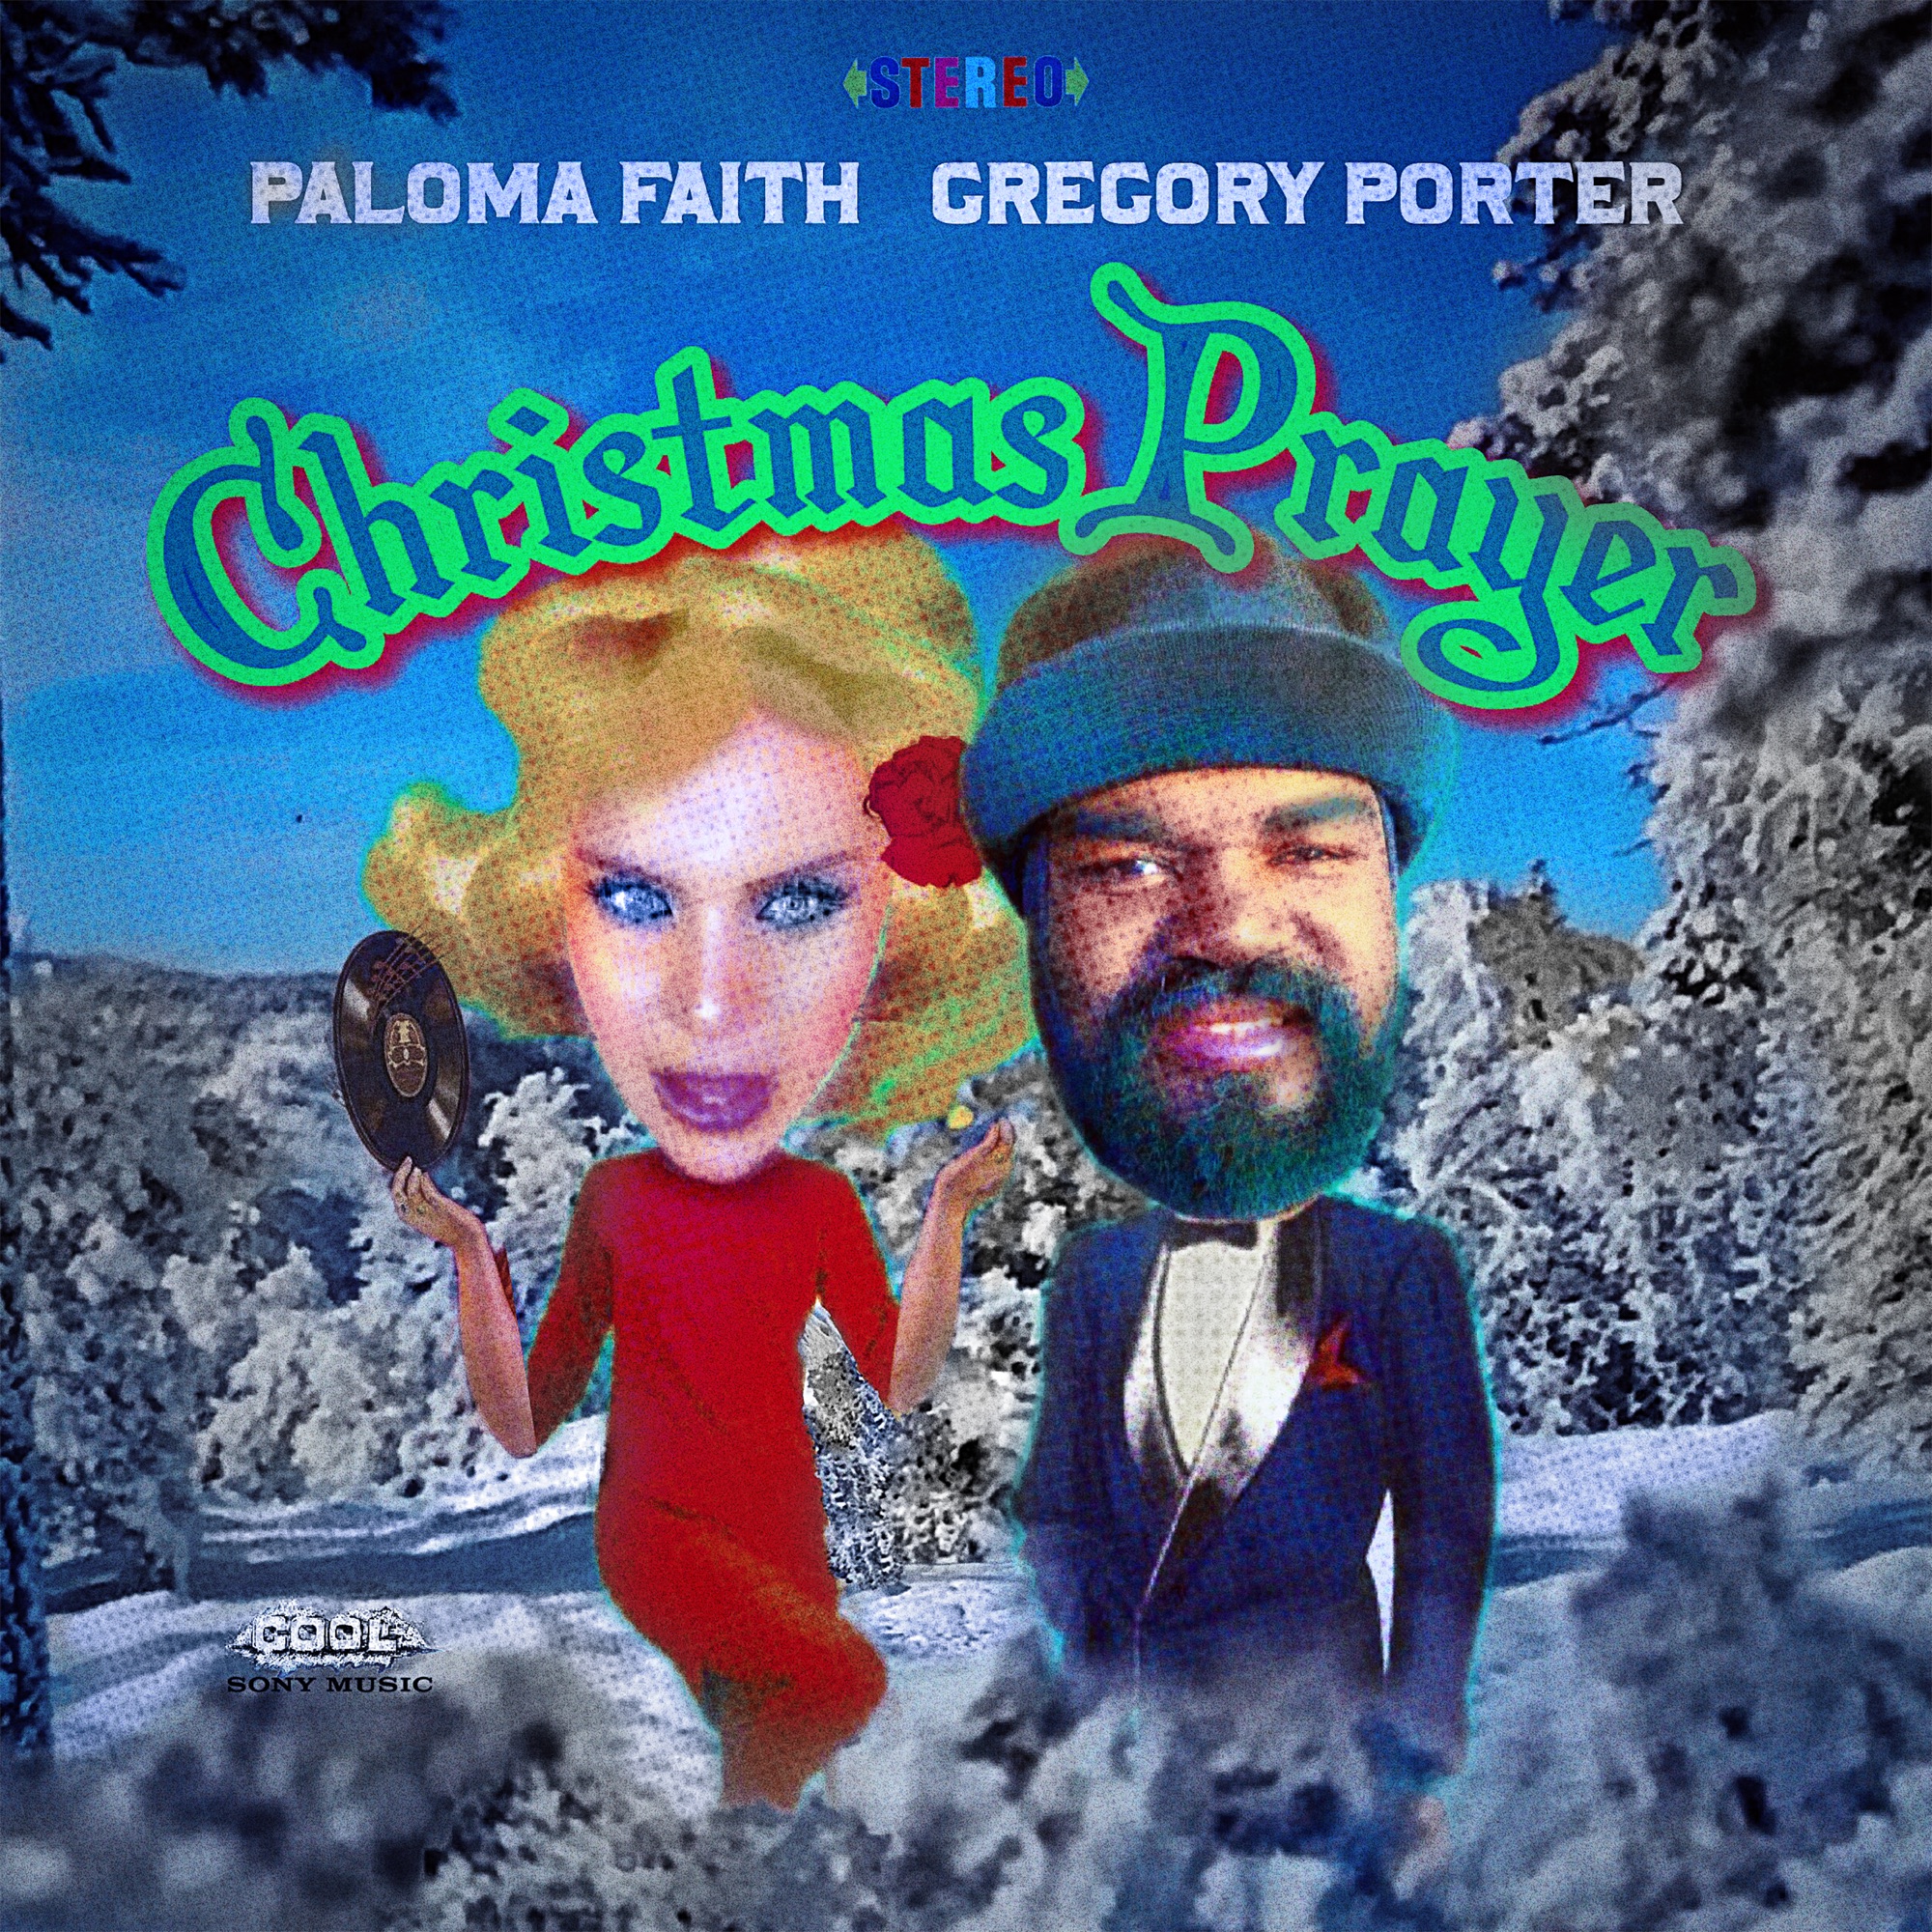 Paloma Faith & Gregory Porter - Christmas Prayer - Single